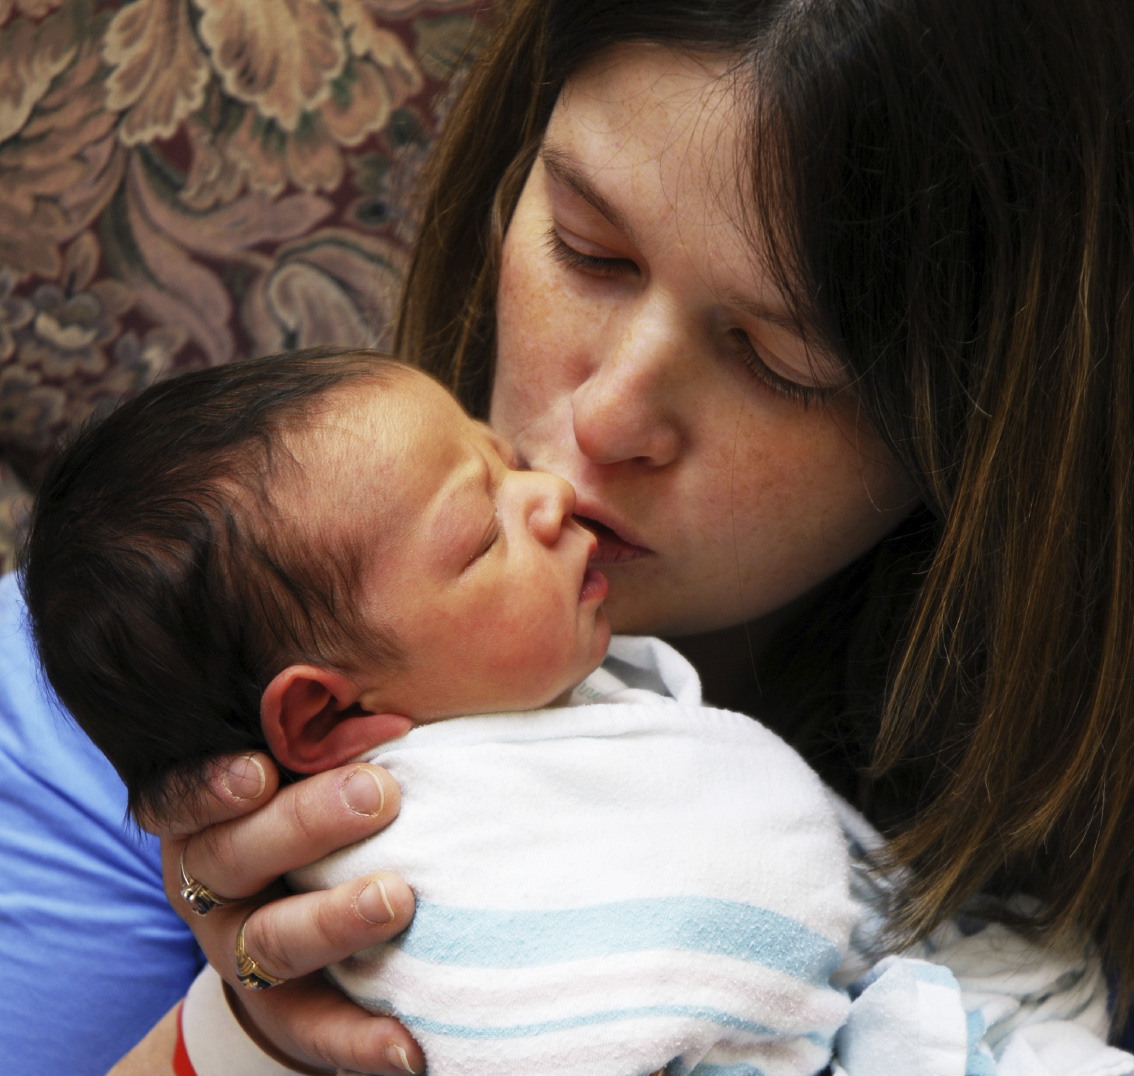 surrogate mother mothers surrogacy social responsibility prweb